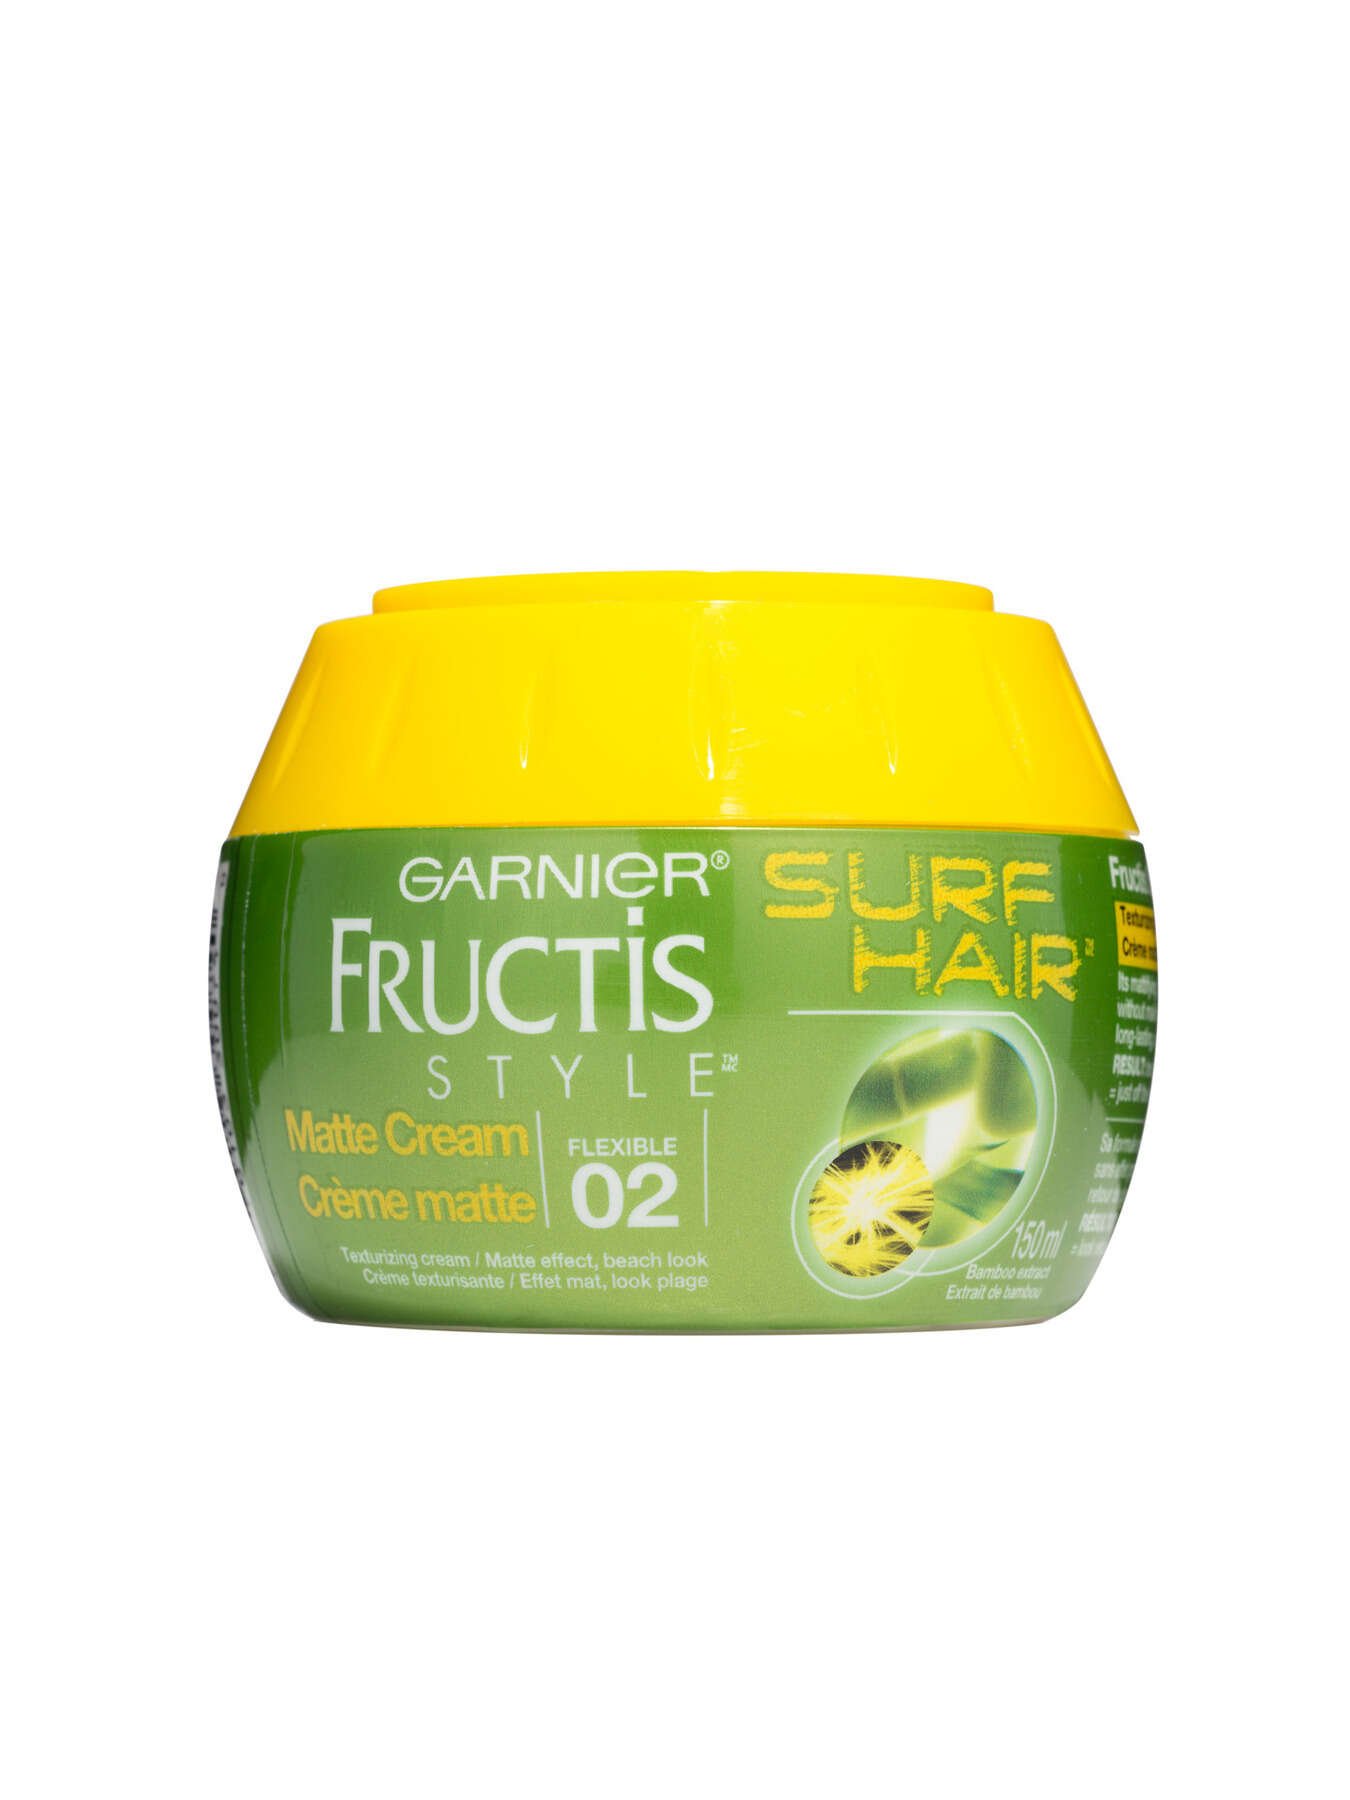 Surf Gel, 150 mL | Garnier Fructis Style